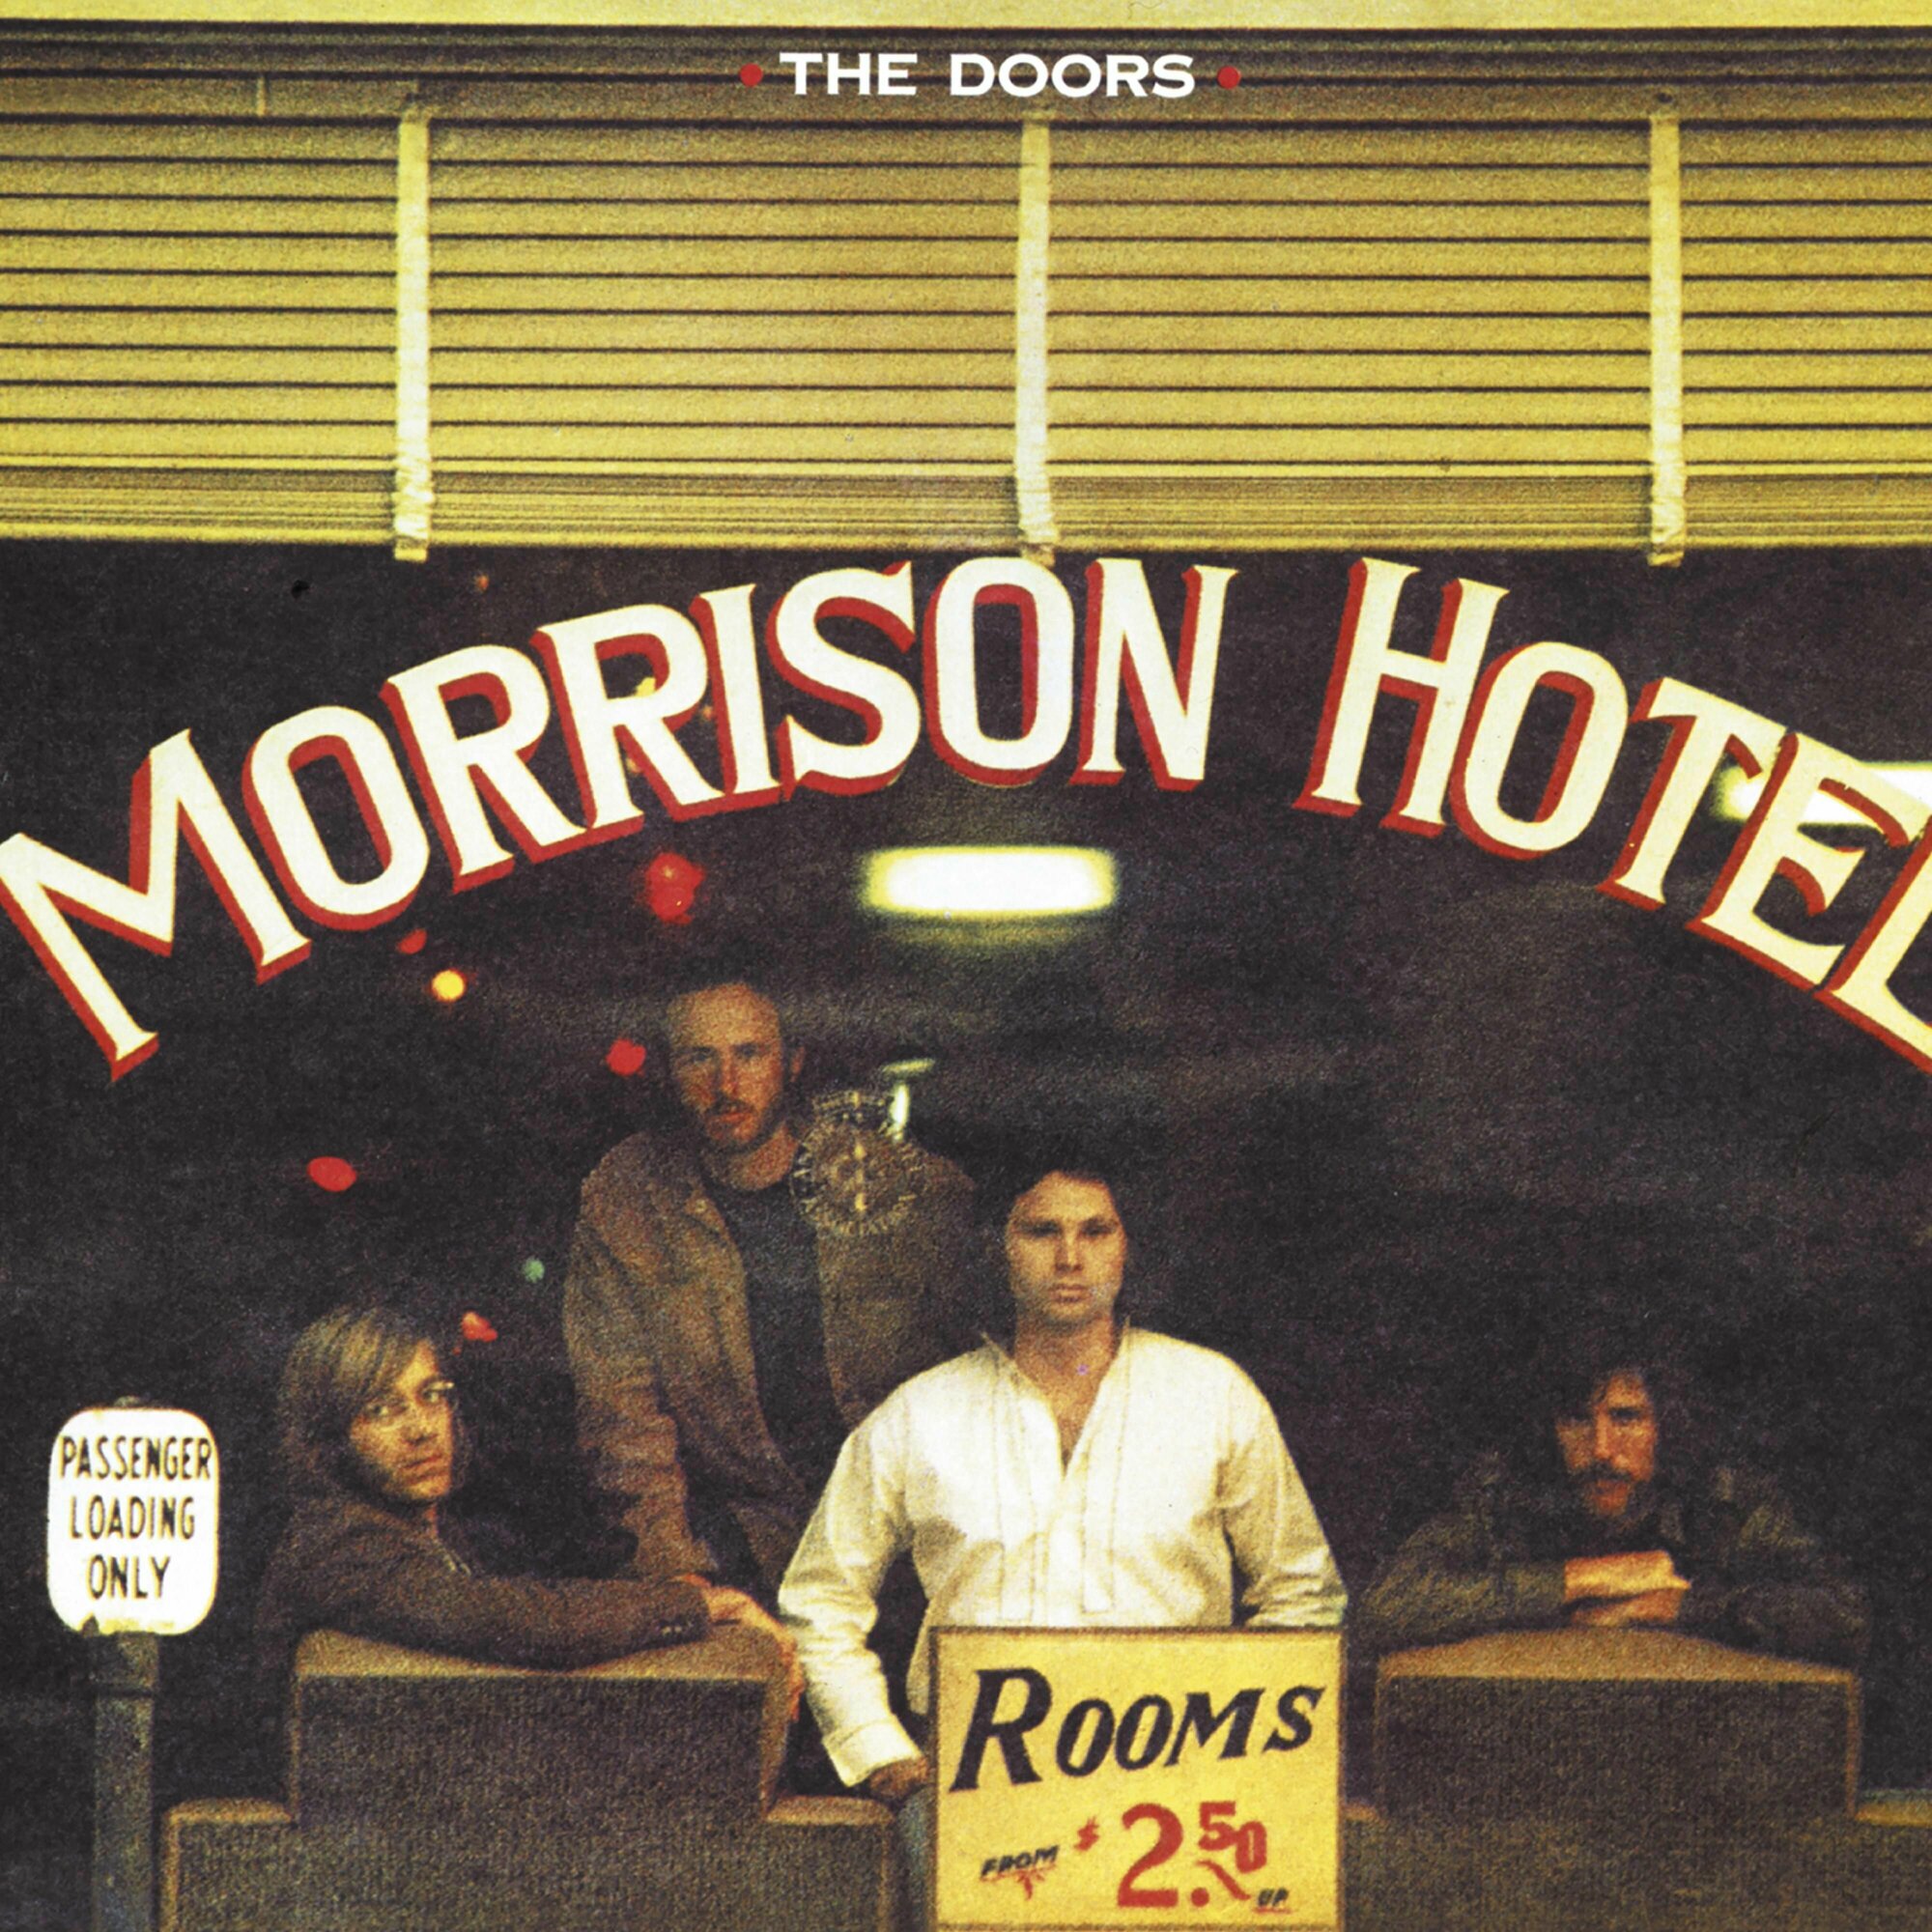 The Doors – Morrison Hotel (Deluxe Edition)